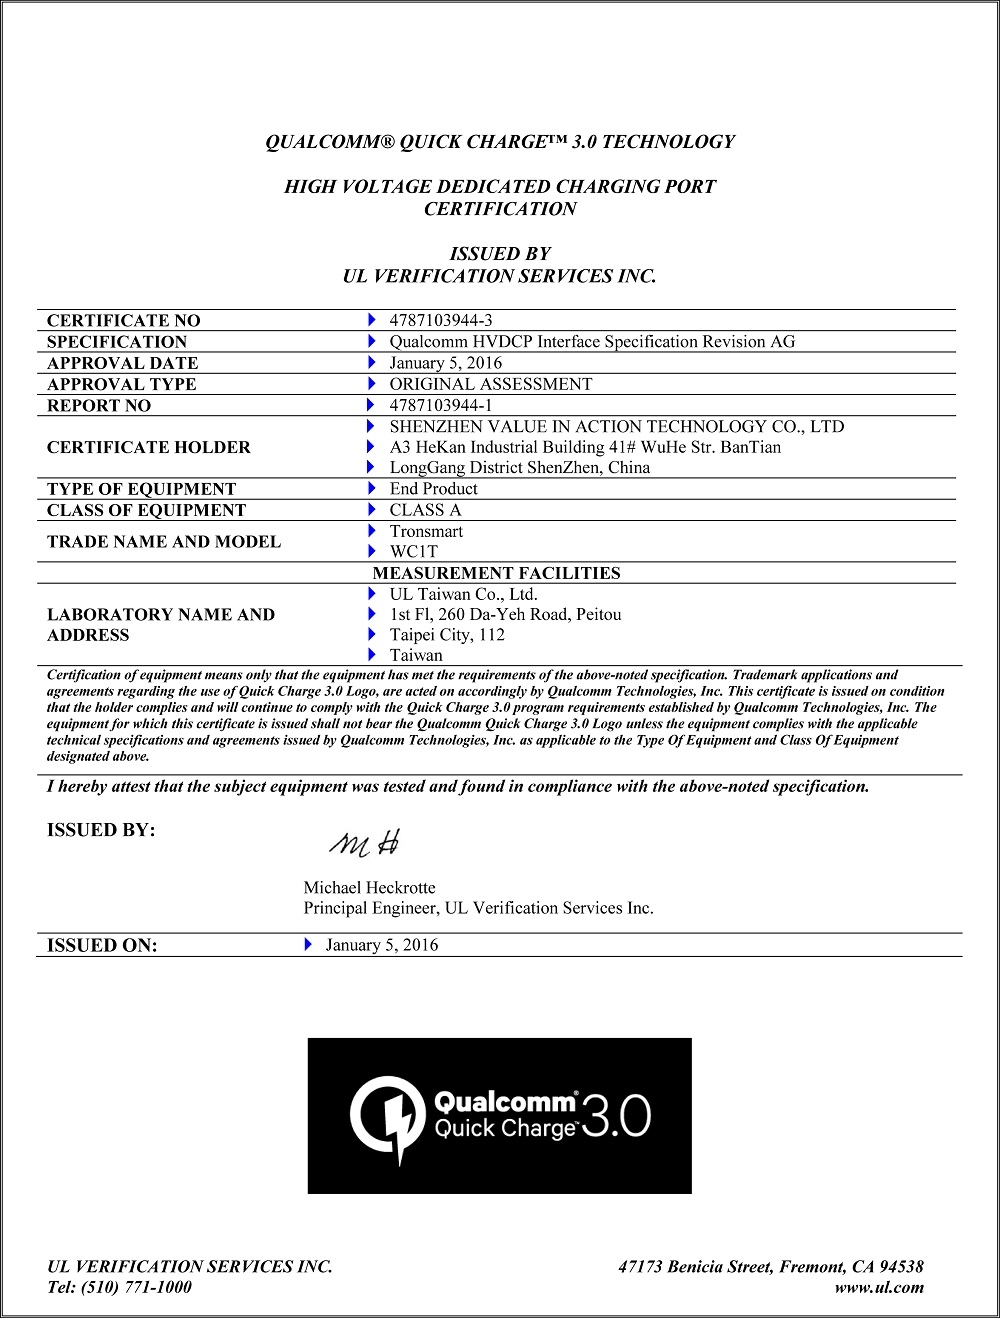 qc3.0-certificate-Tronsmart-WC1T